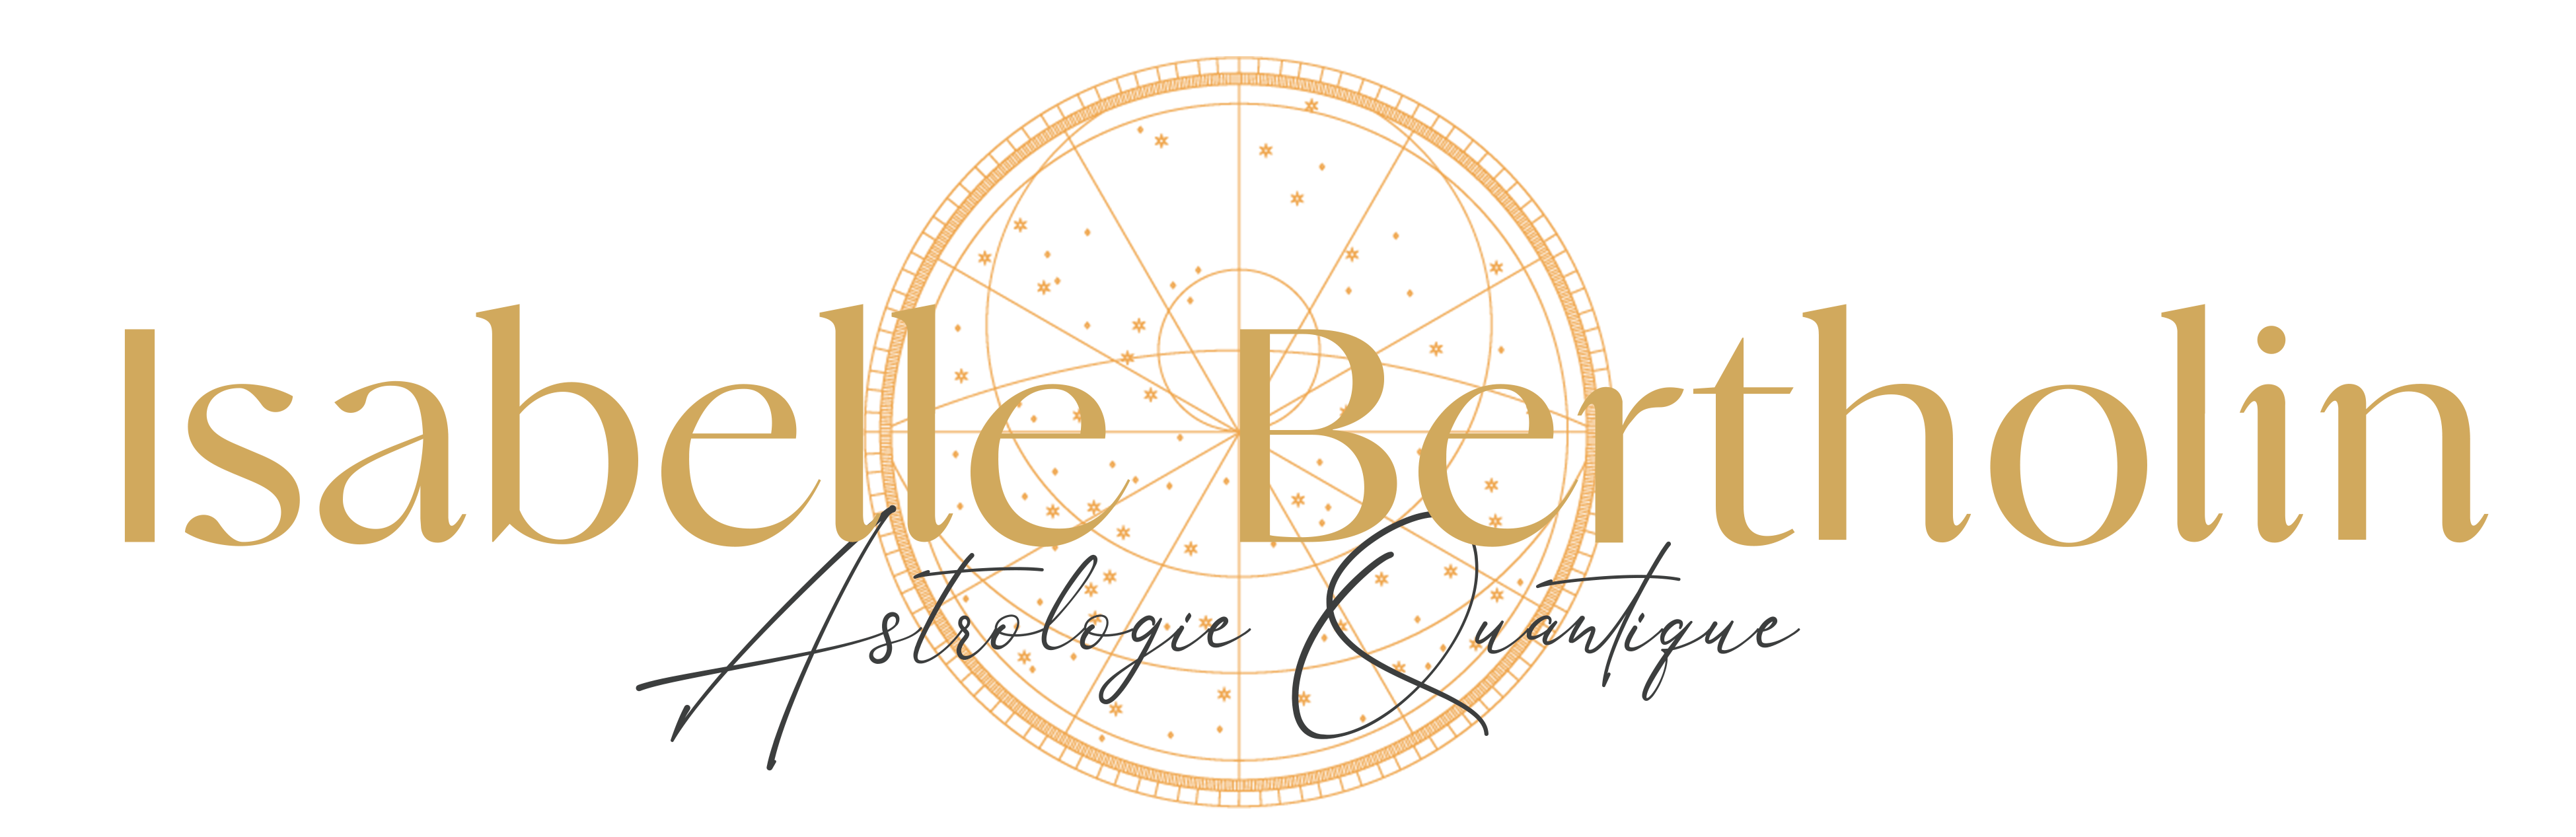 Isabelle Bertholin - Astrologie quantique